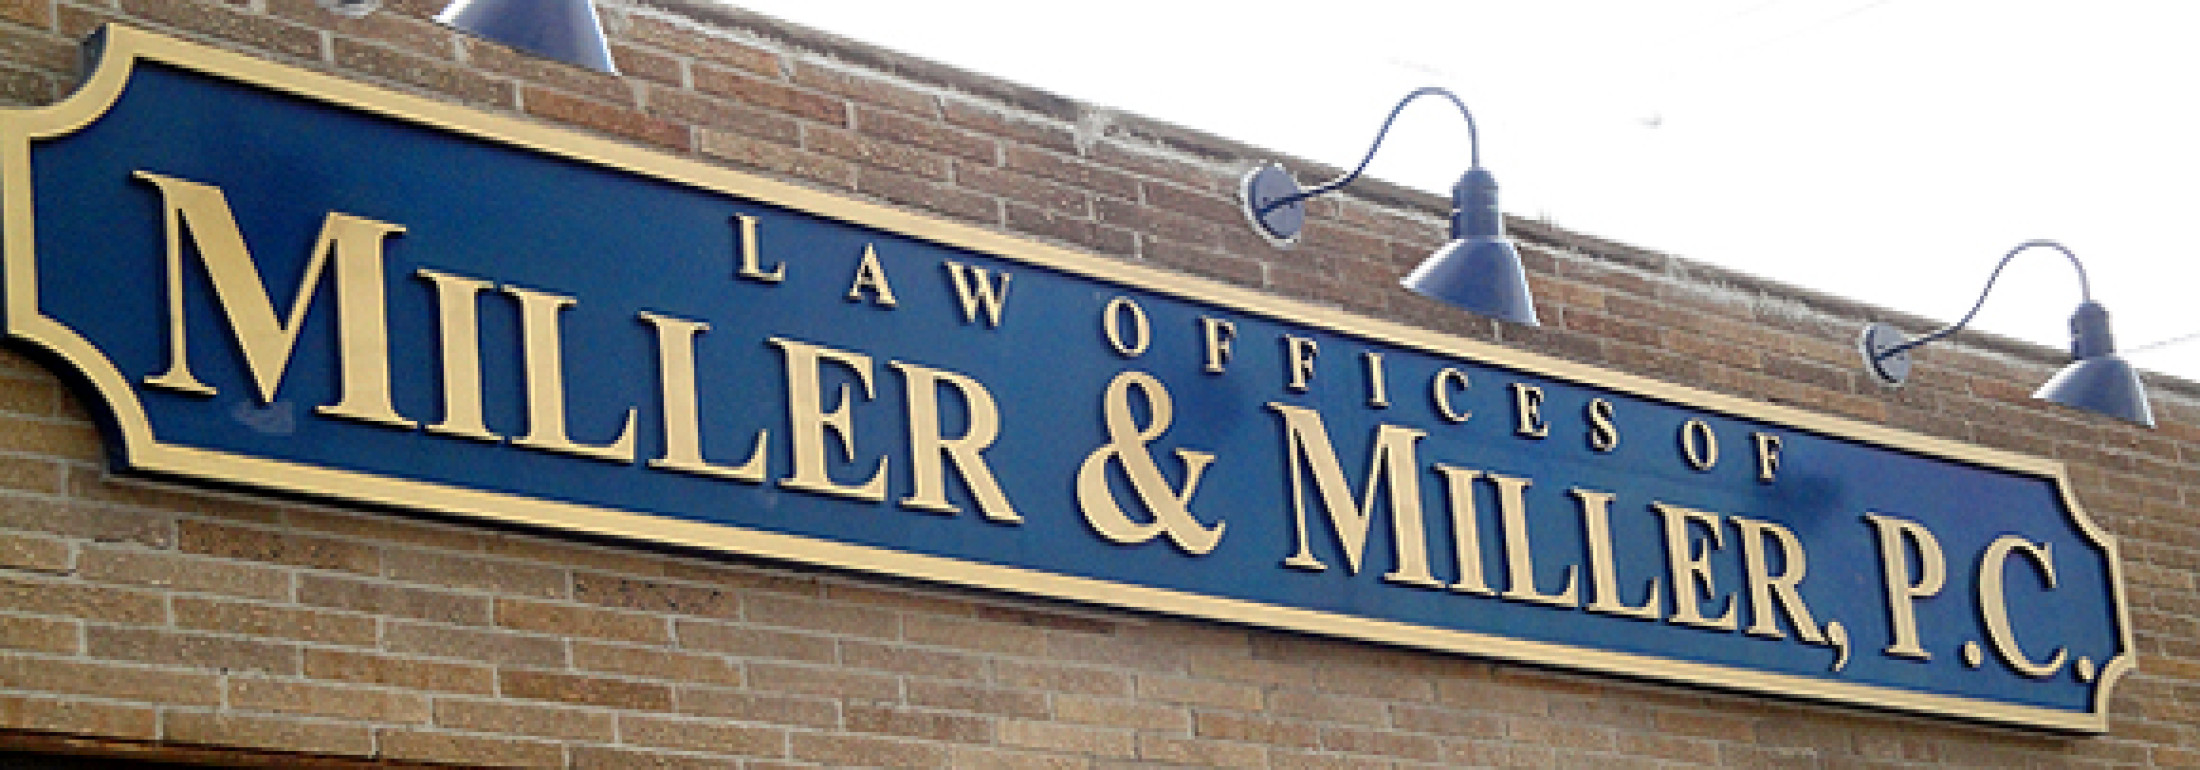 Law Offices of Miller & Miller, P.C. sign